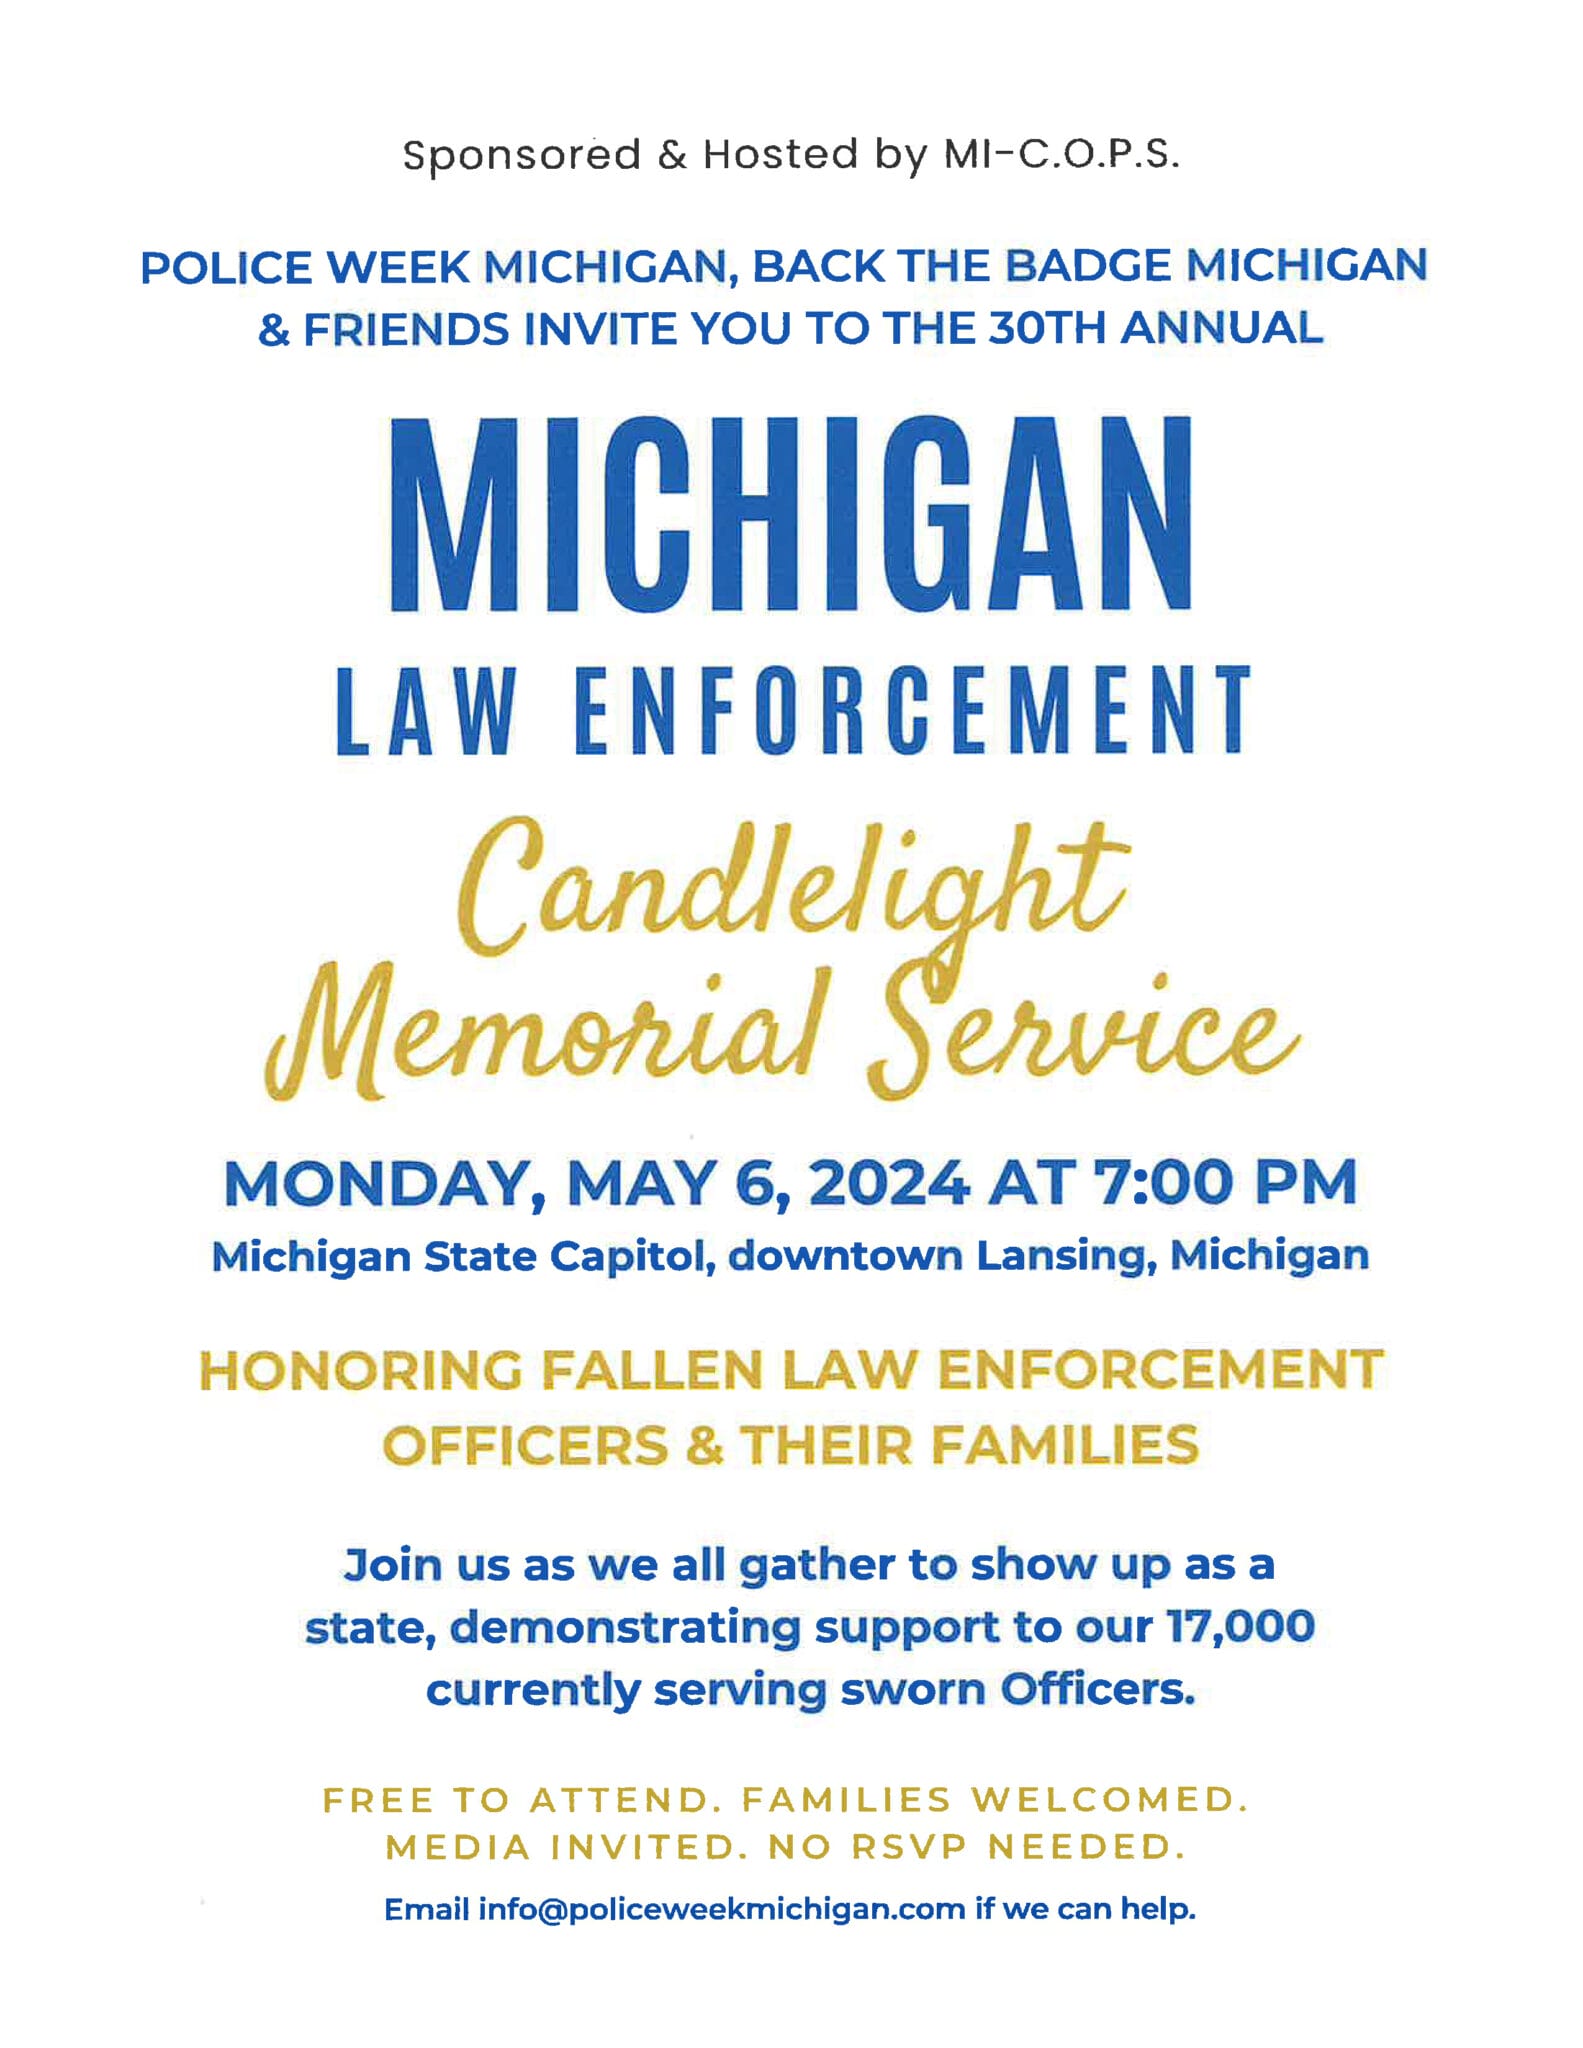 Michigan Law Enforcement Candlelight Memorial Service | POAM